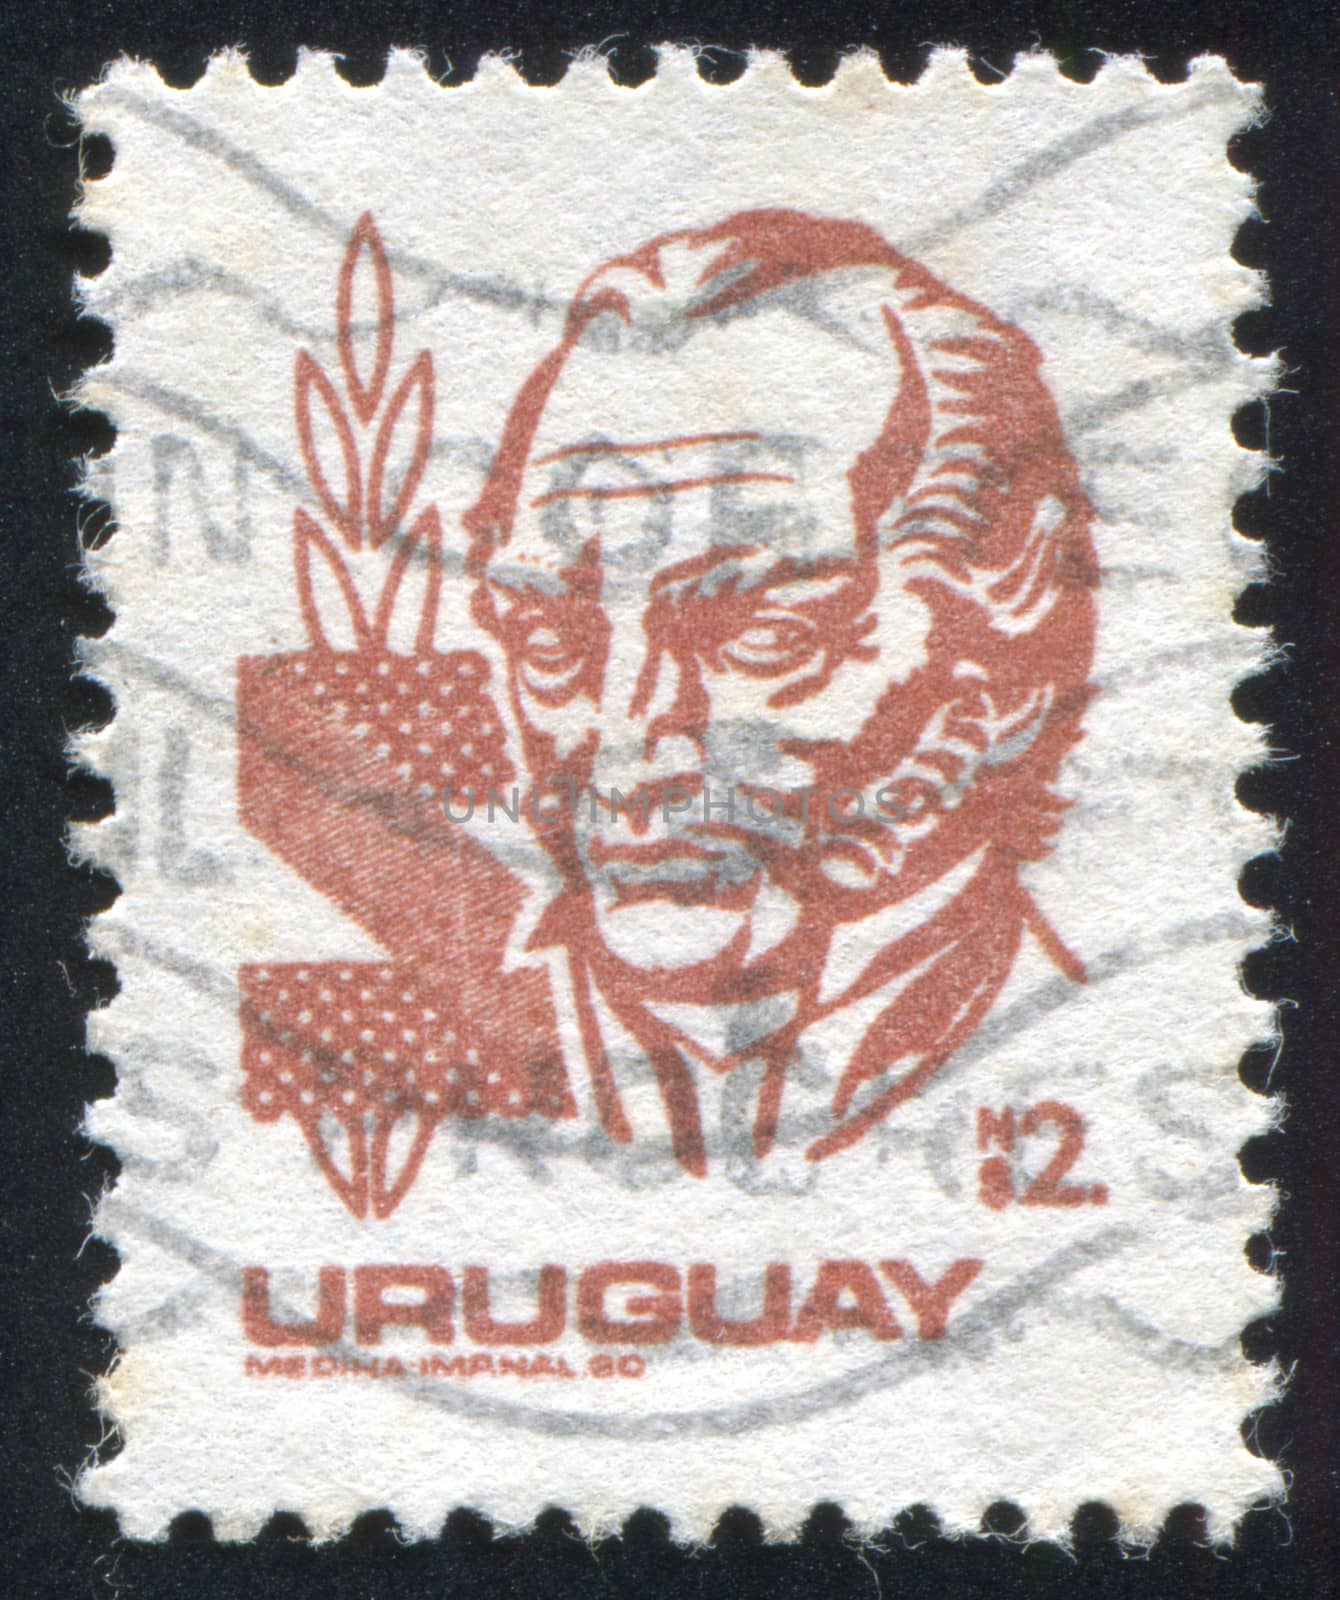 URUGUAY - CIRCA 1980: stamp printed by Uruguay, shows Jose Gervasio Artigas, circa 1980